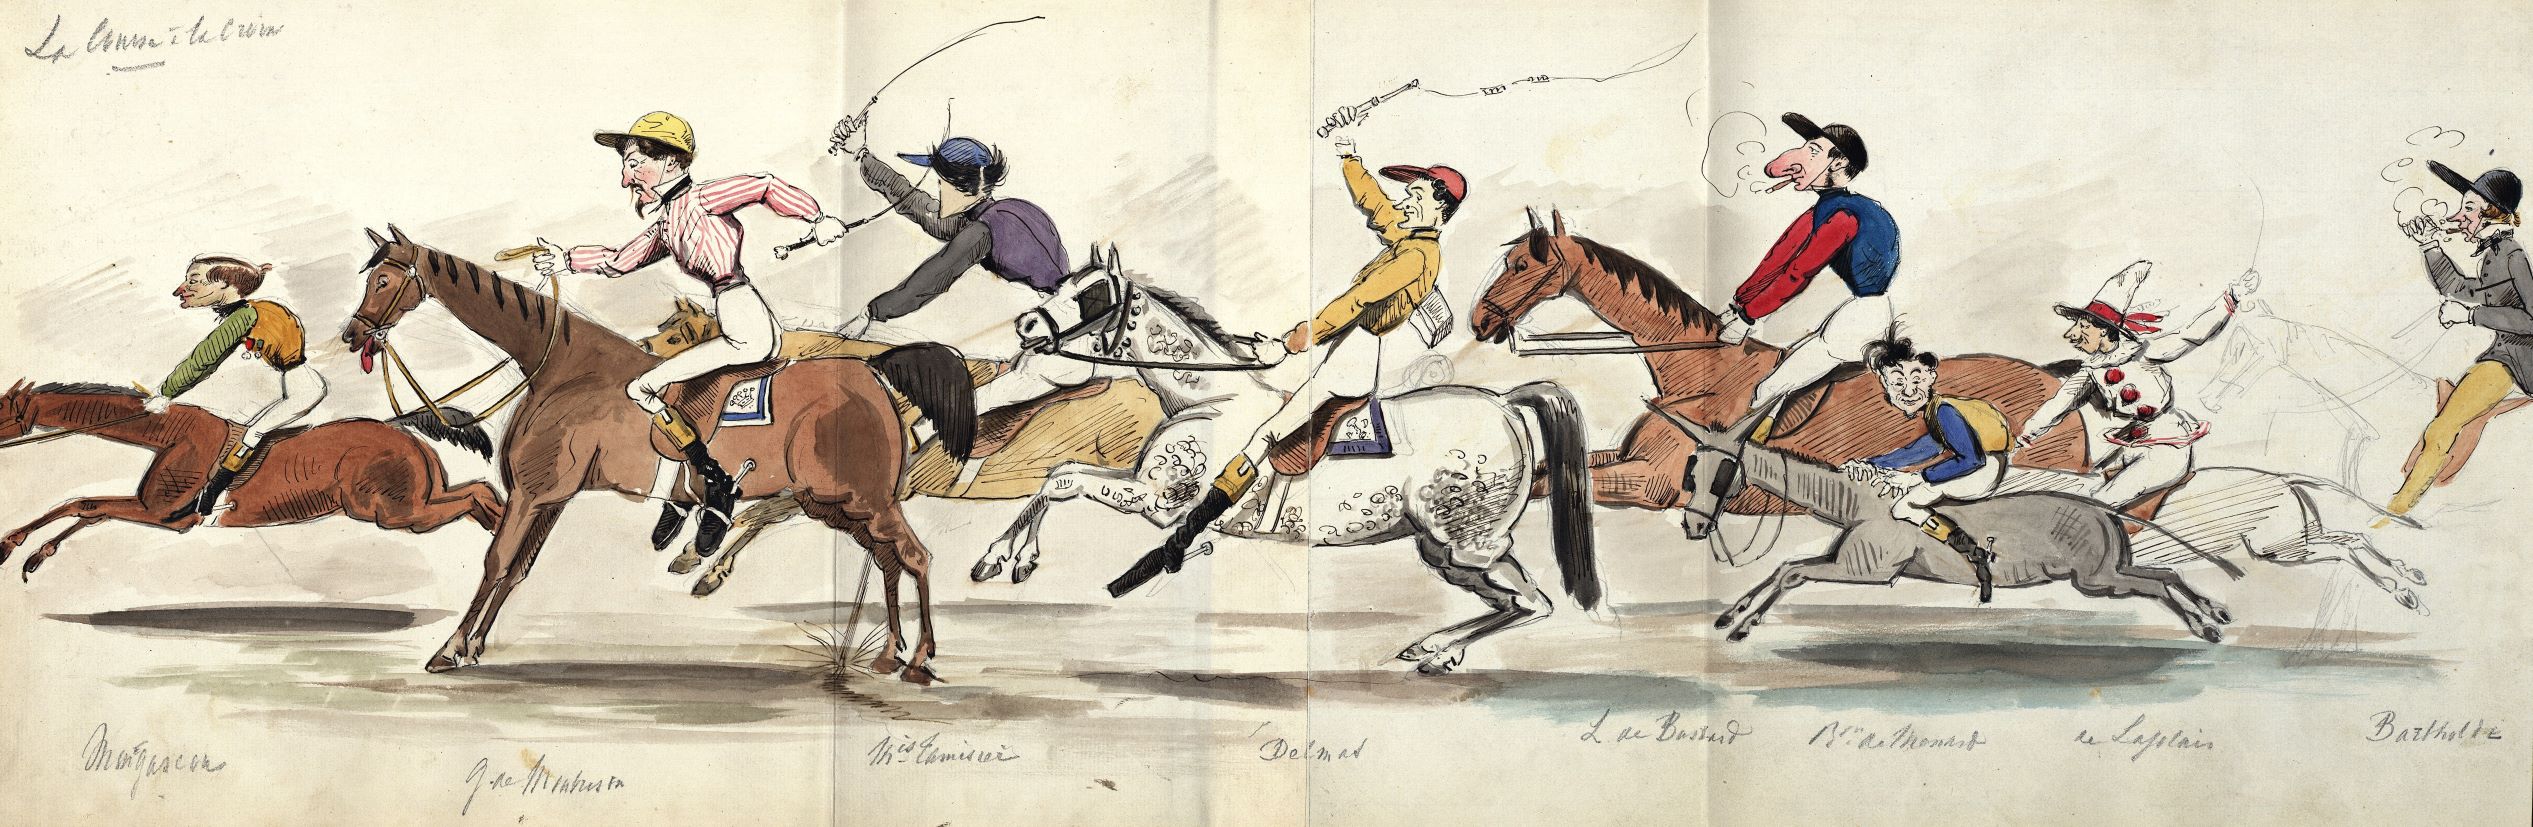 Course à cheval de diplomates français (dessin aquarellé) (agrandir l'image)